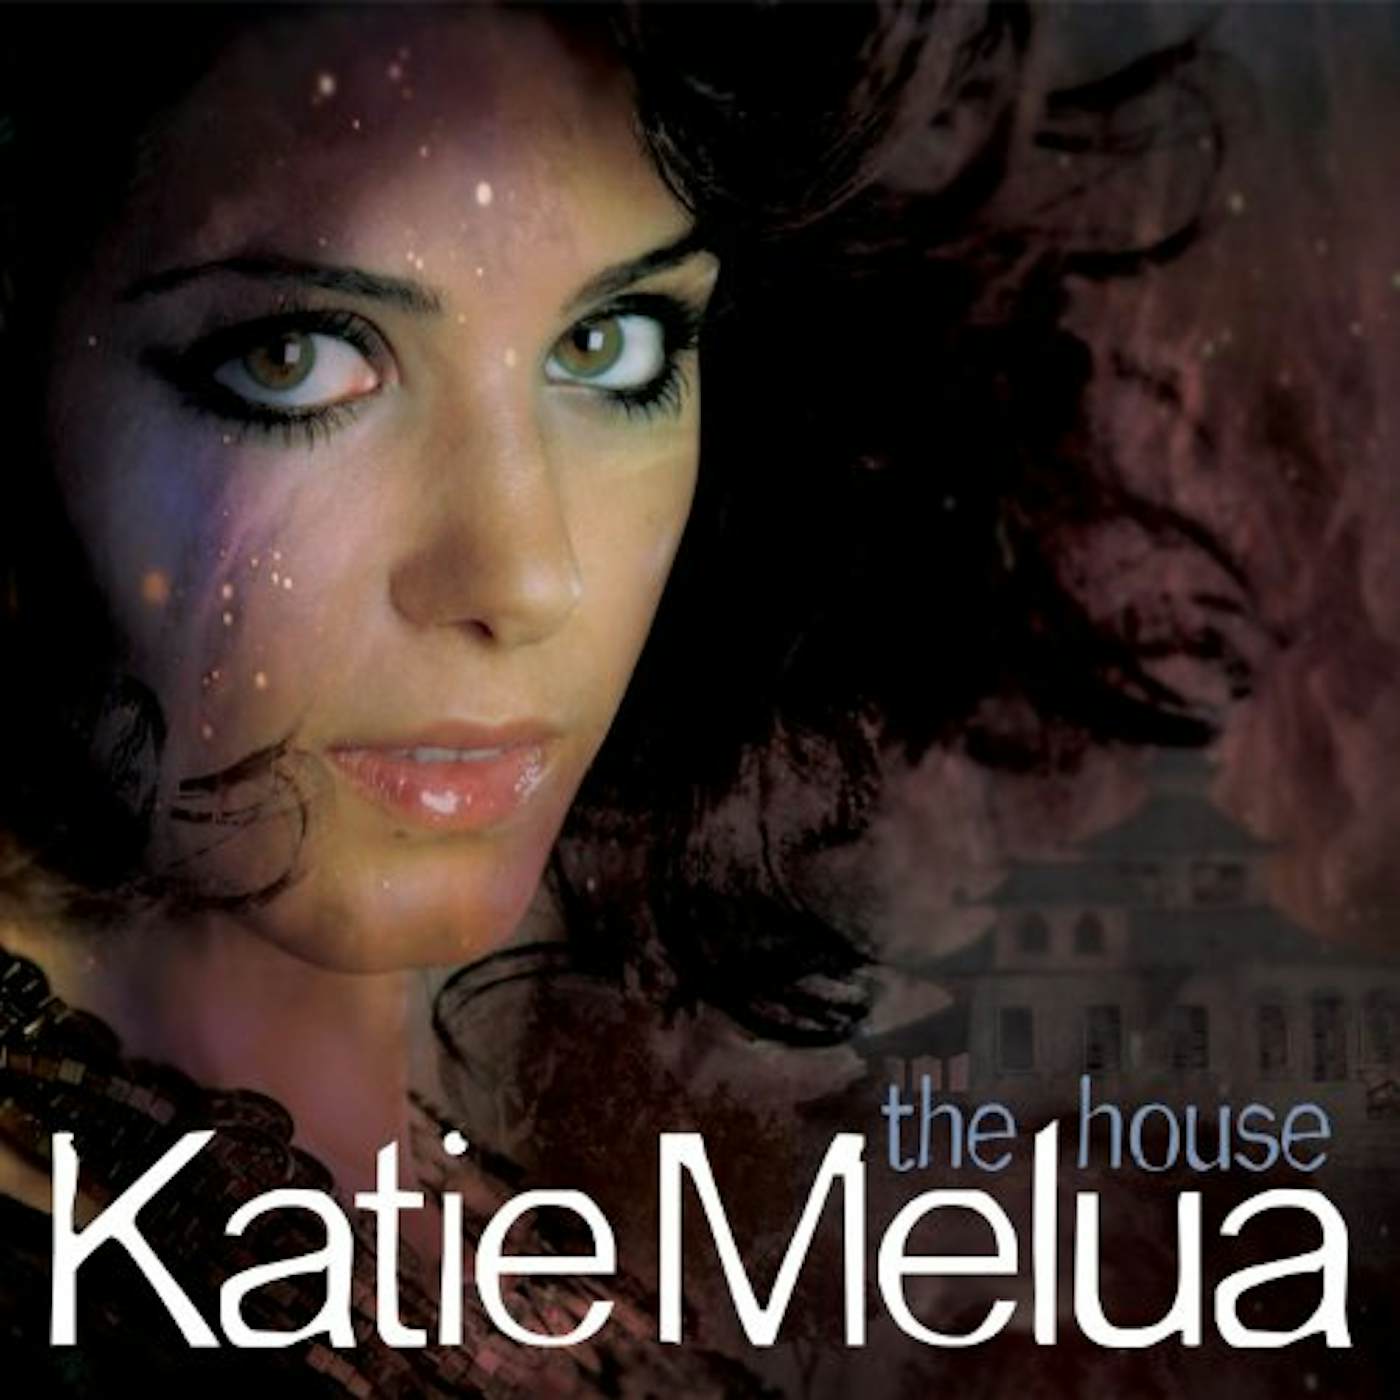 Katie Melua HOUSE CD